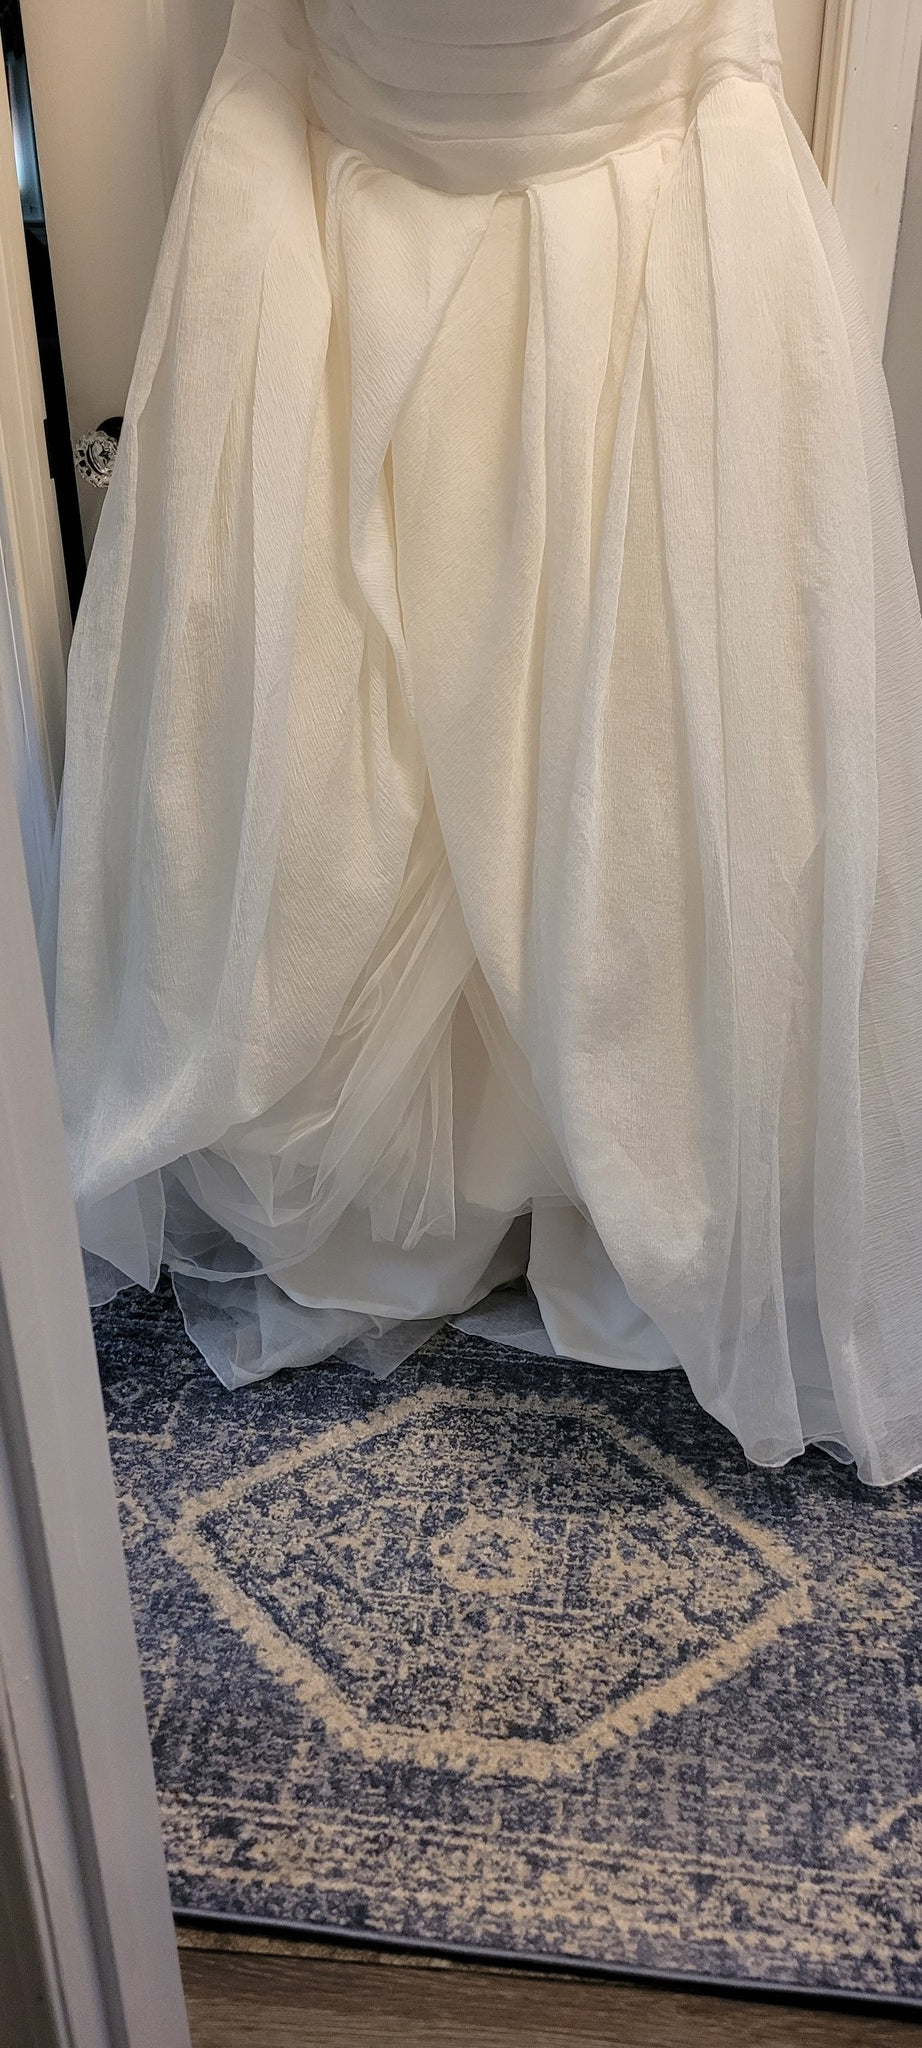 Vera Wang 'None' wedding dress size-22 NEW